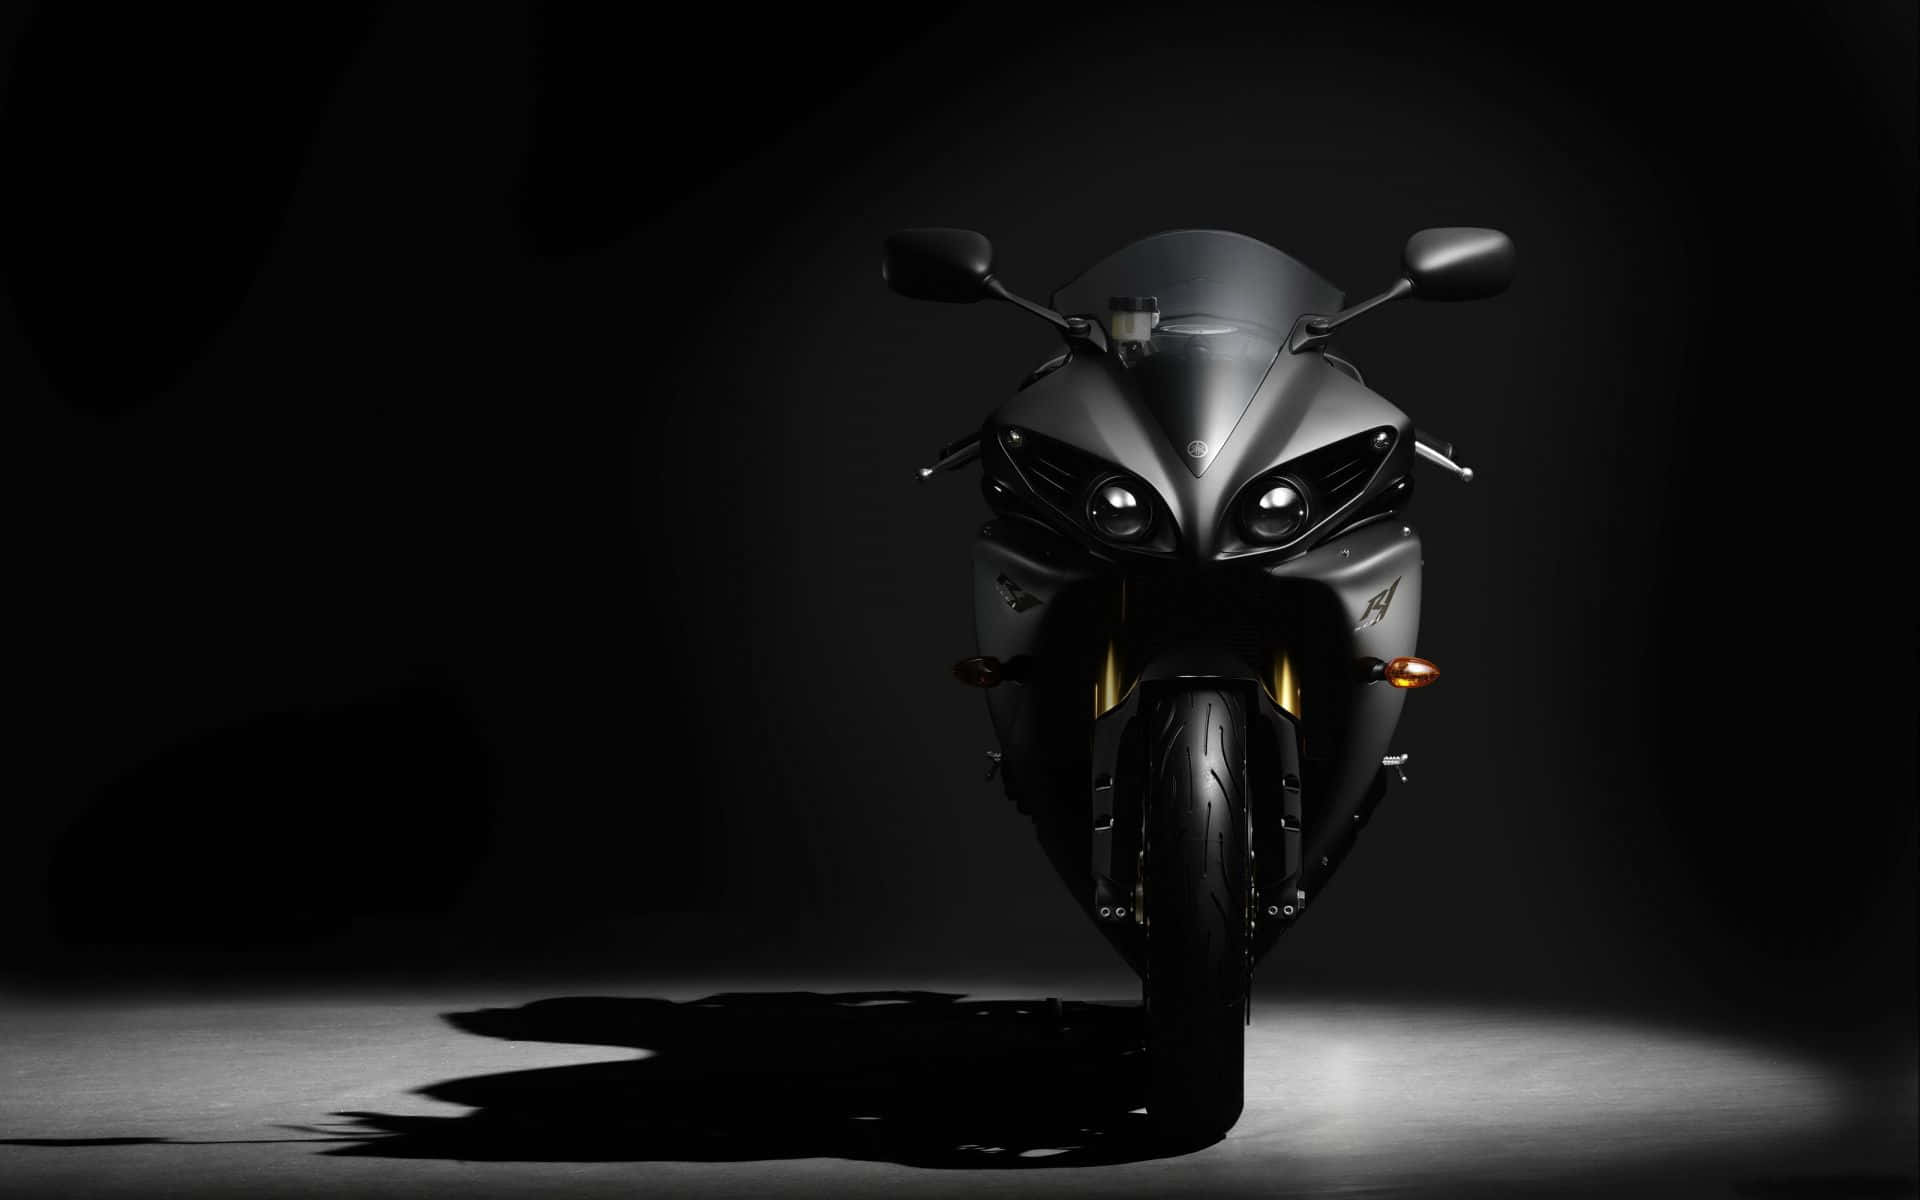 Sleek Motorcycle Dramatic Lighting